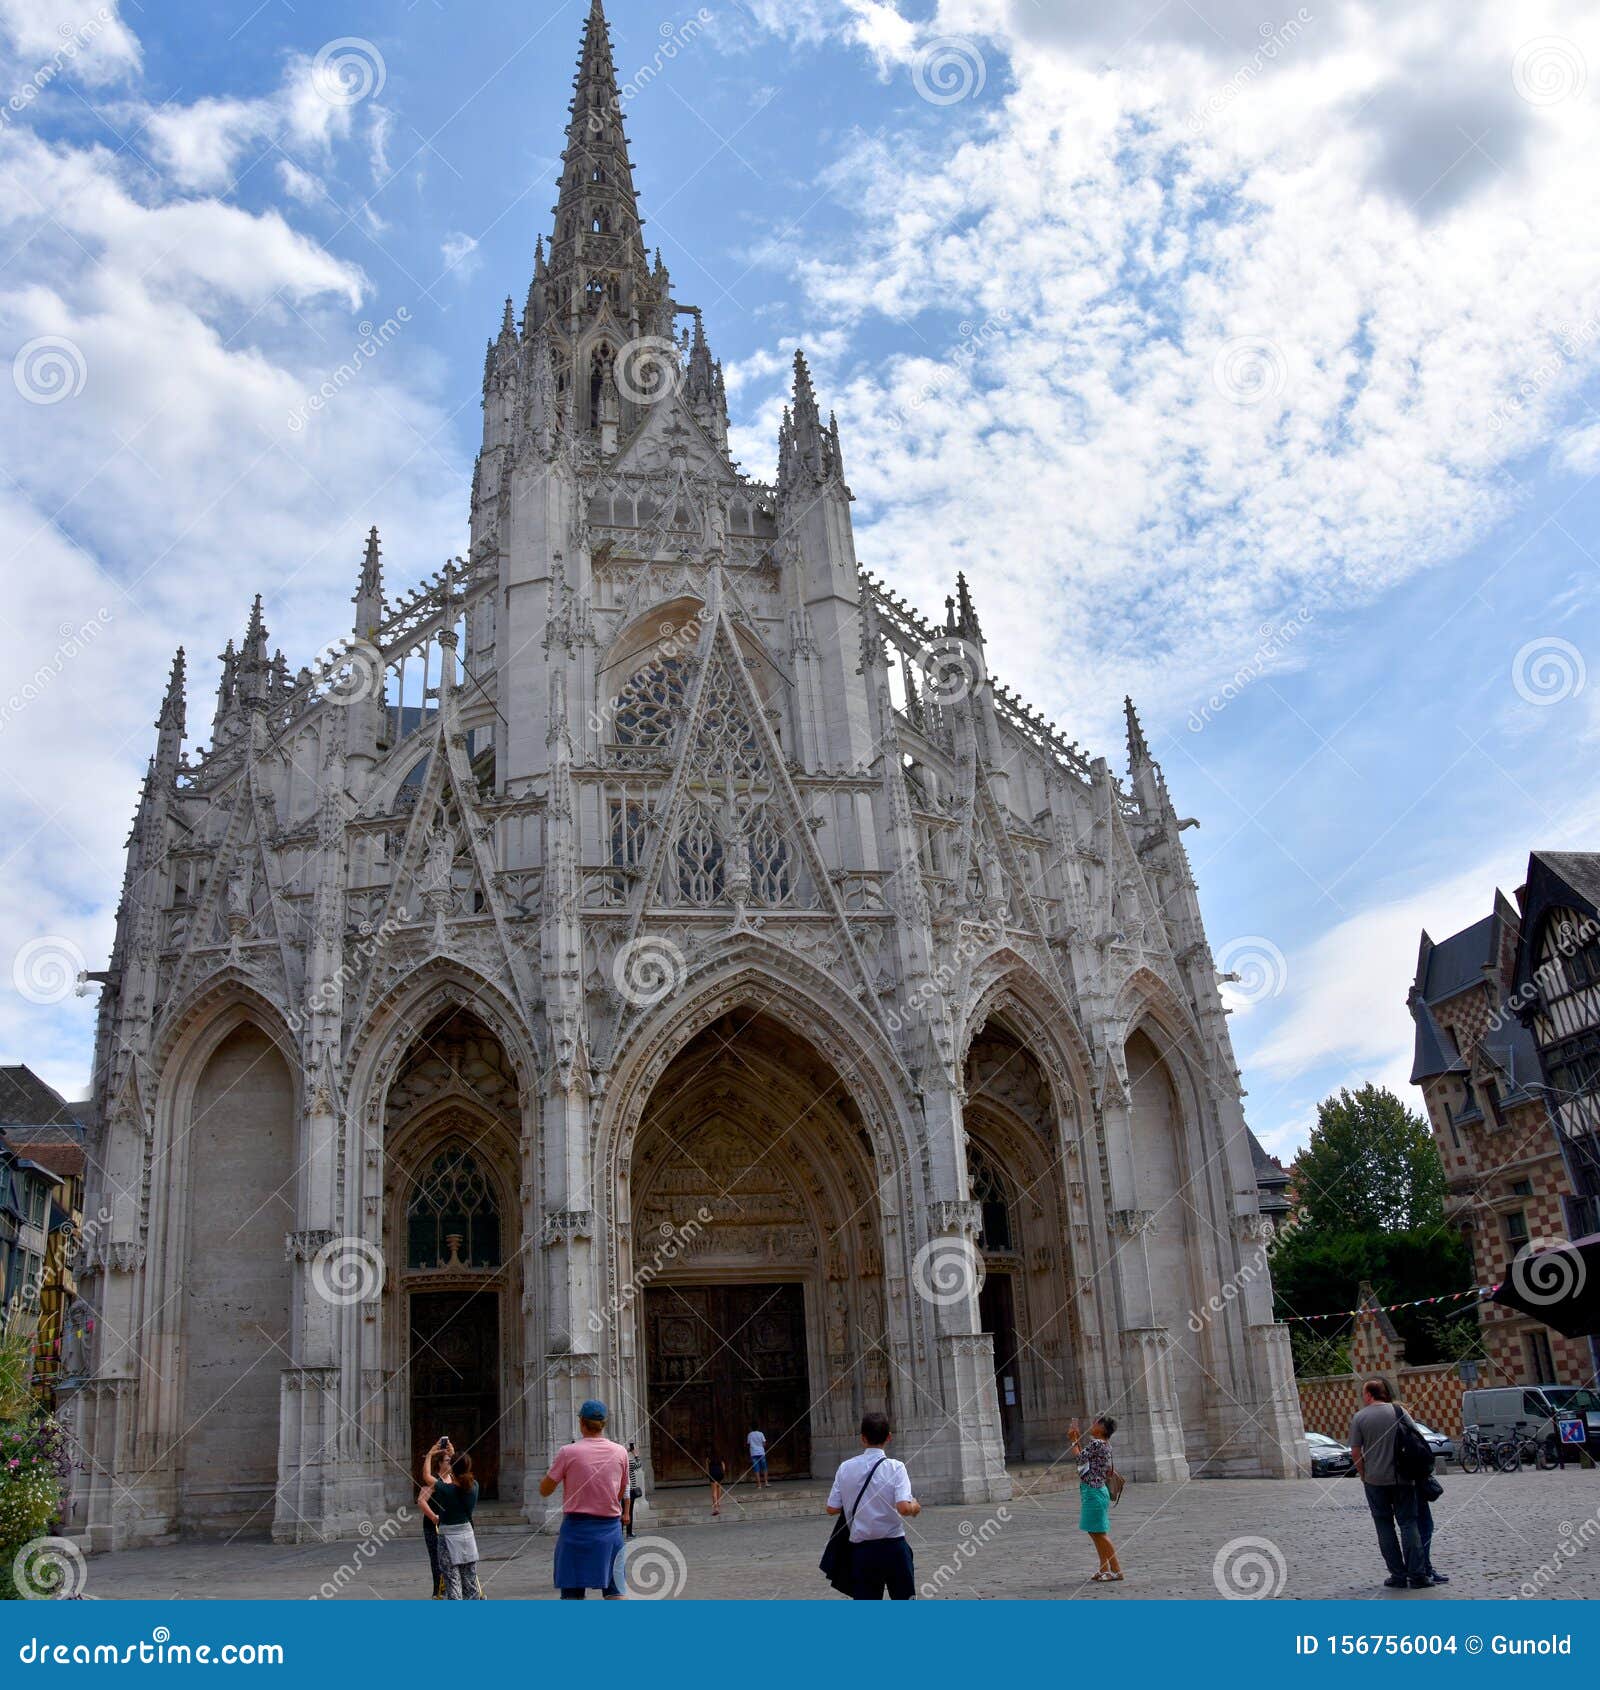 Saint Maclou Gothic Church In Rouen Editorial Stock Image Image Of Flamboyant Built